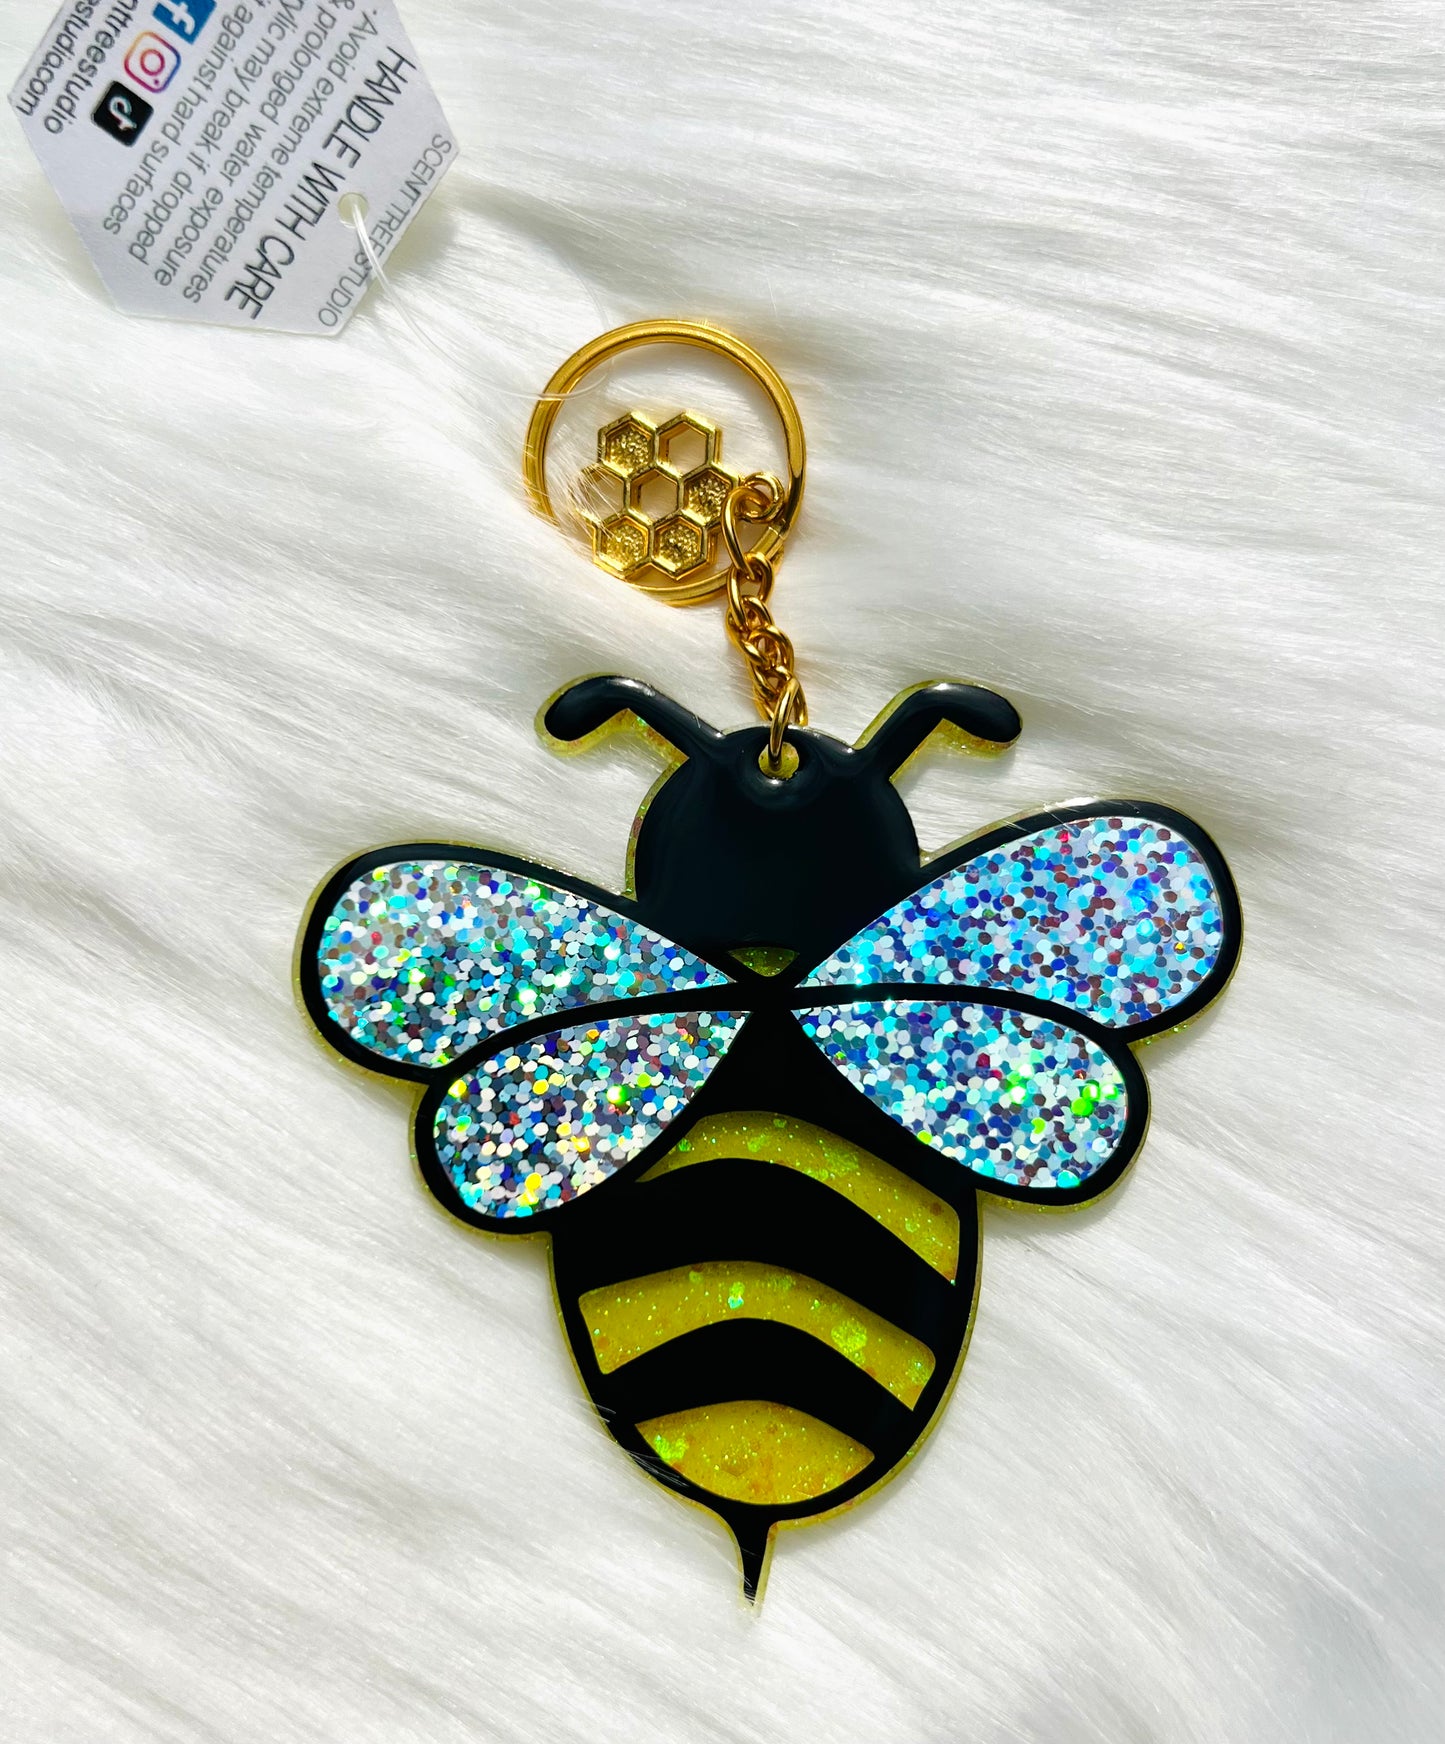 Bumble Bee Keychain - 3 Inch